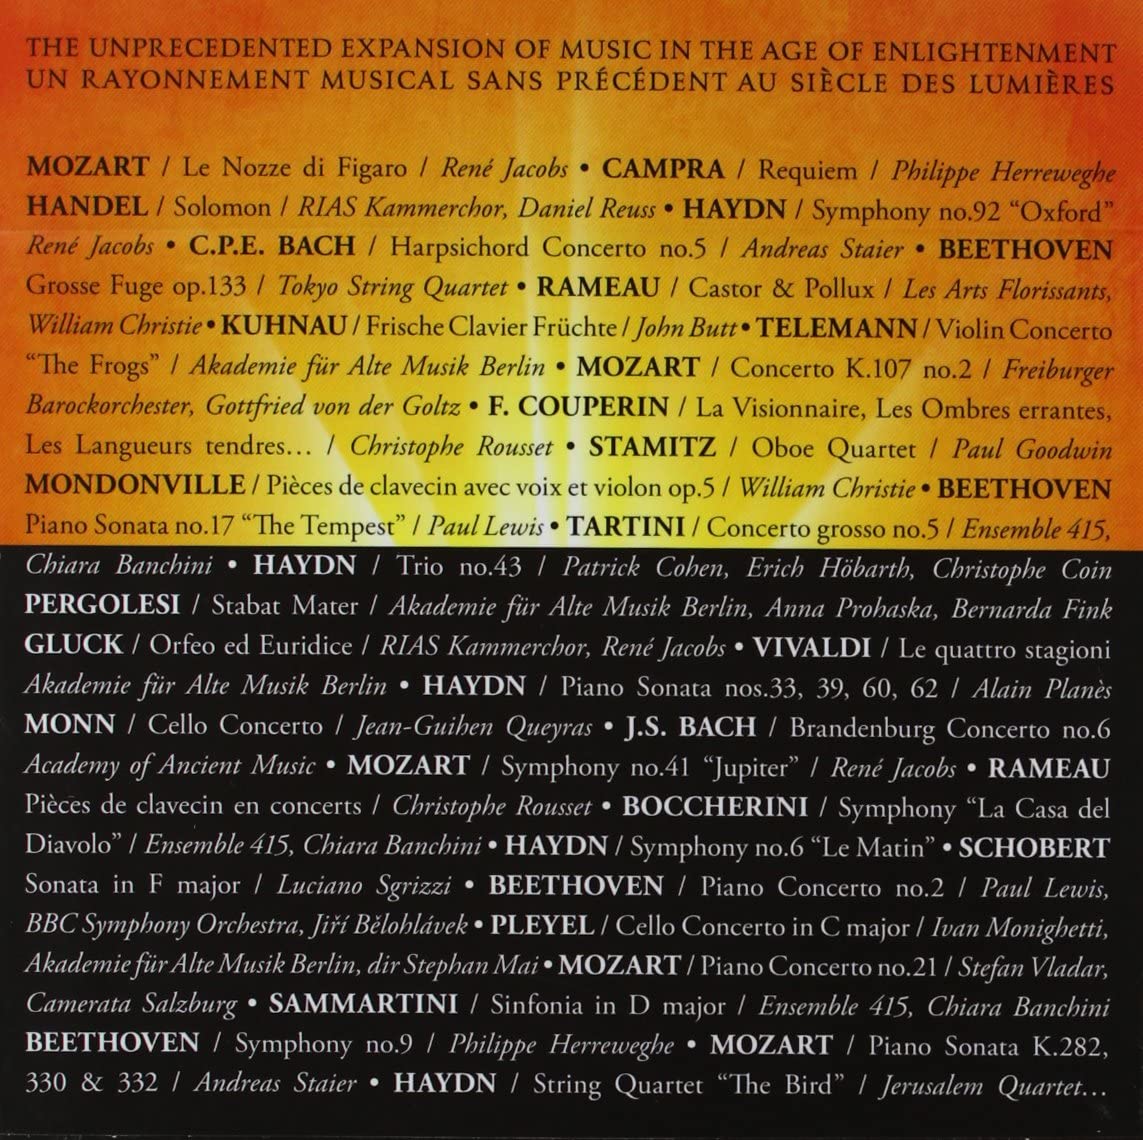 LUMIERES - muzyka wieku oświecenia - od Vivaldiego do Beethovena, m.in. Mozart: Le Nozze di Figaro, Gluck: Orfeo ed Euridice, Rameau: Castor & Pollux, Handel: Solomon - kompletne nagrania - slide-1